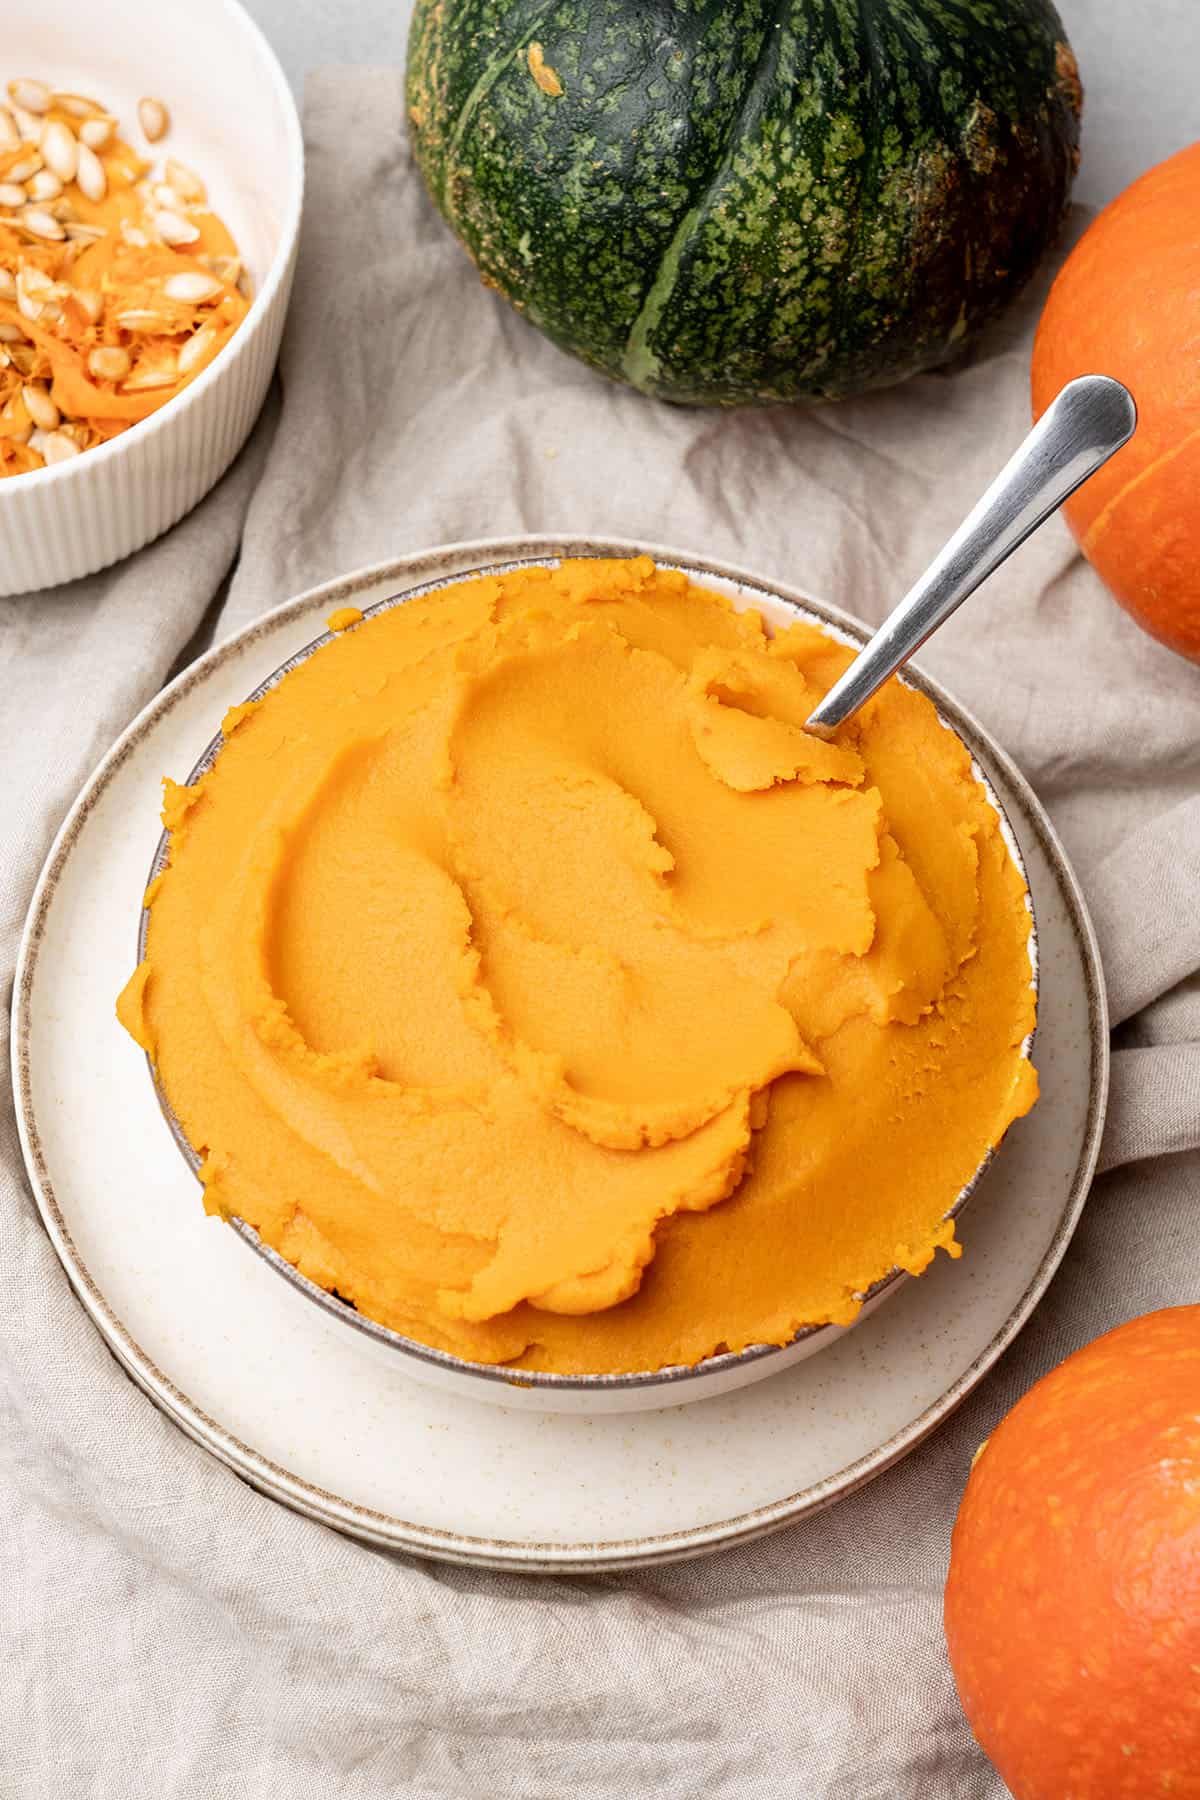 Pumpkin pure on plate.